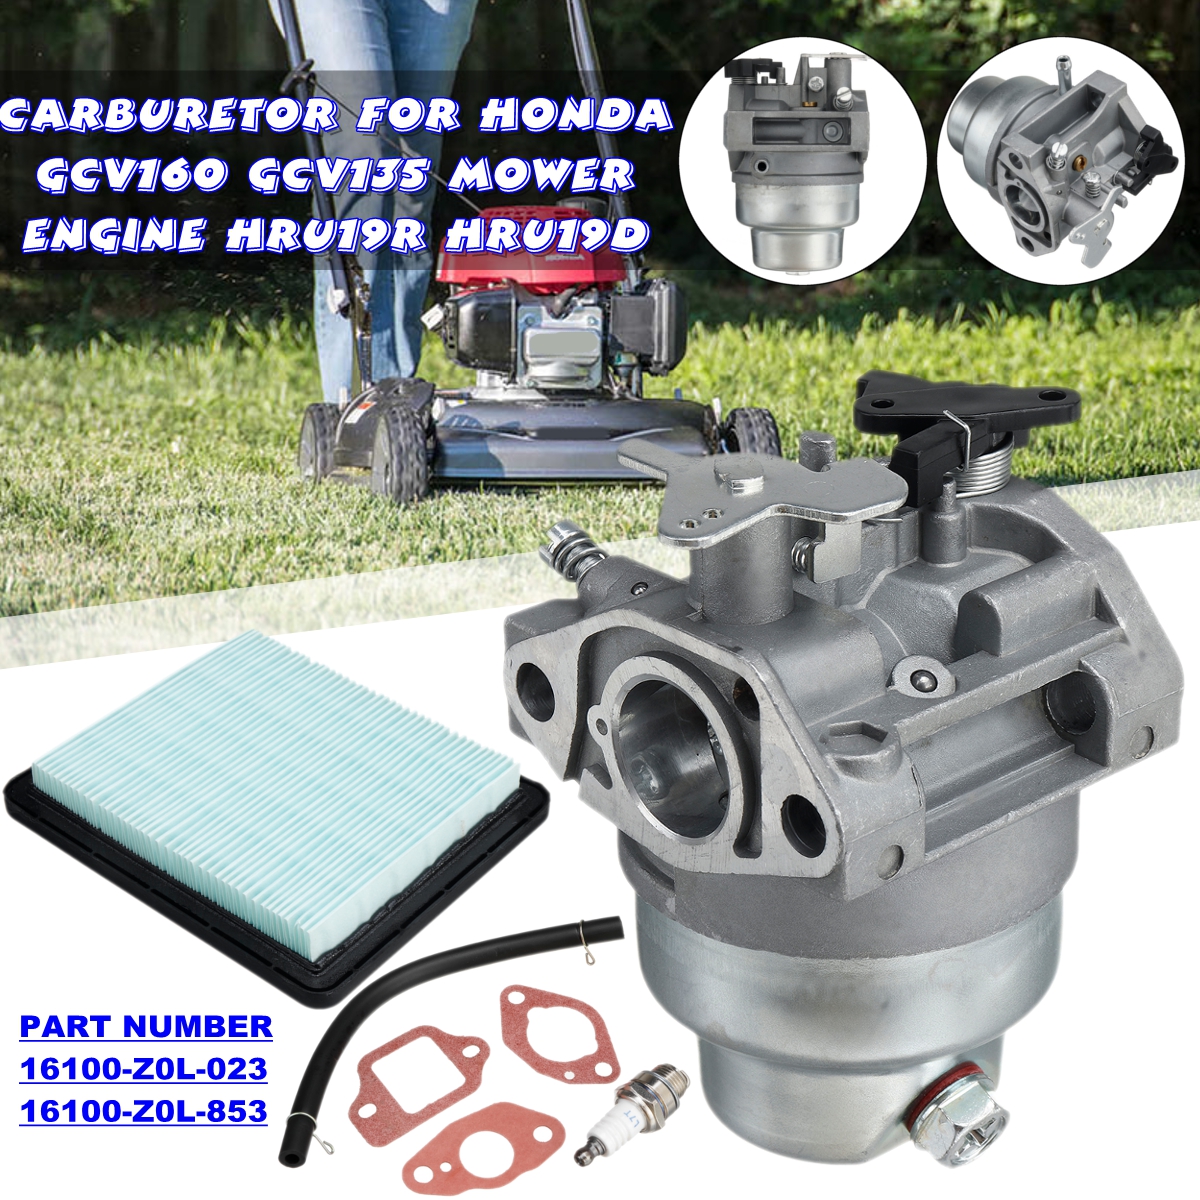 Carburetor-Intake-Kit-Air-Filter-Gaskets-with-Fuel-Line-for-Honda-GCV160-GCV135-Mower-Engine-HRU19R--1842970-1